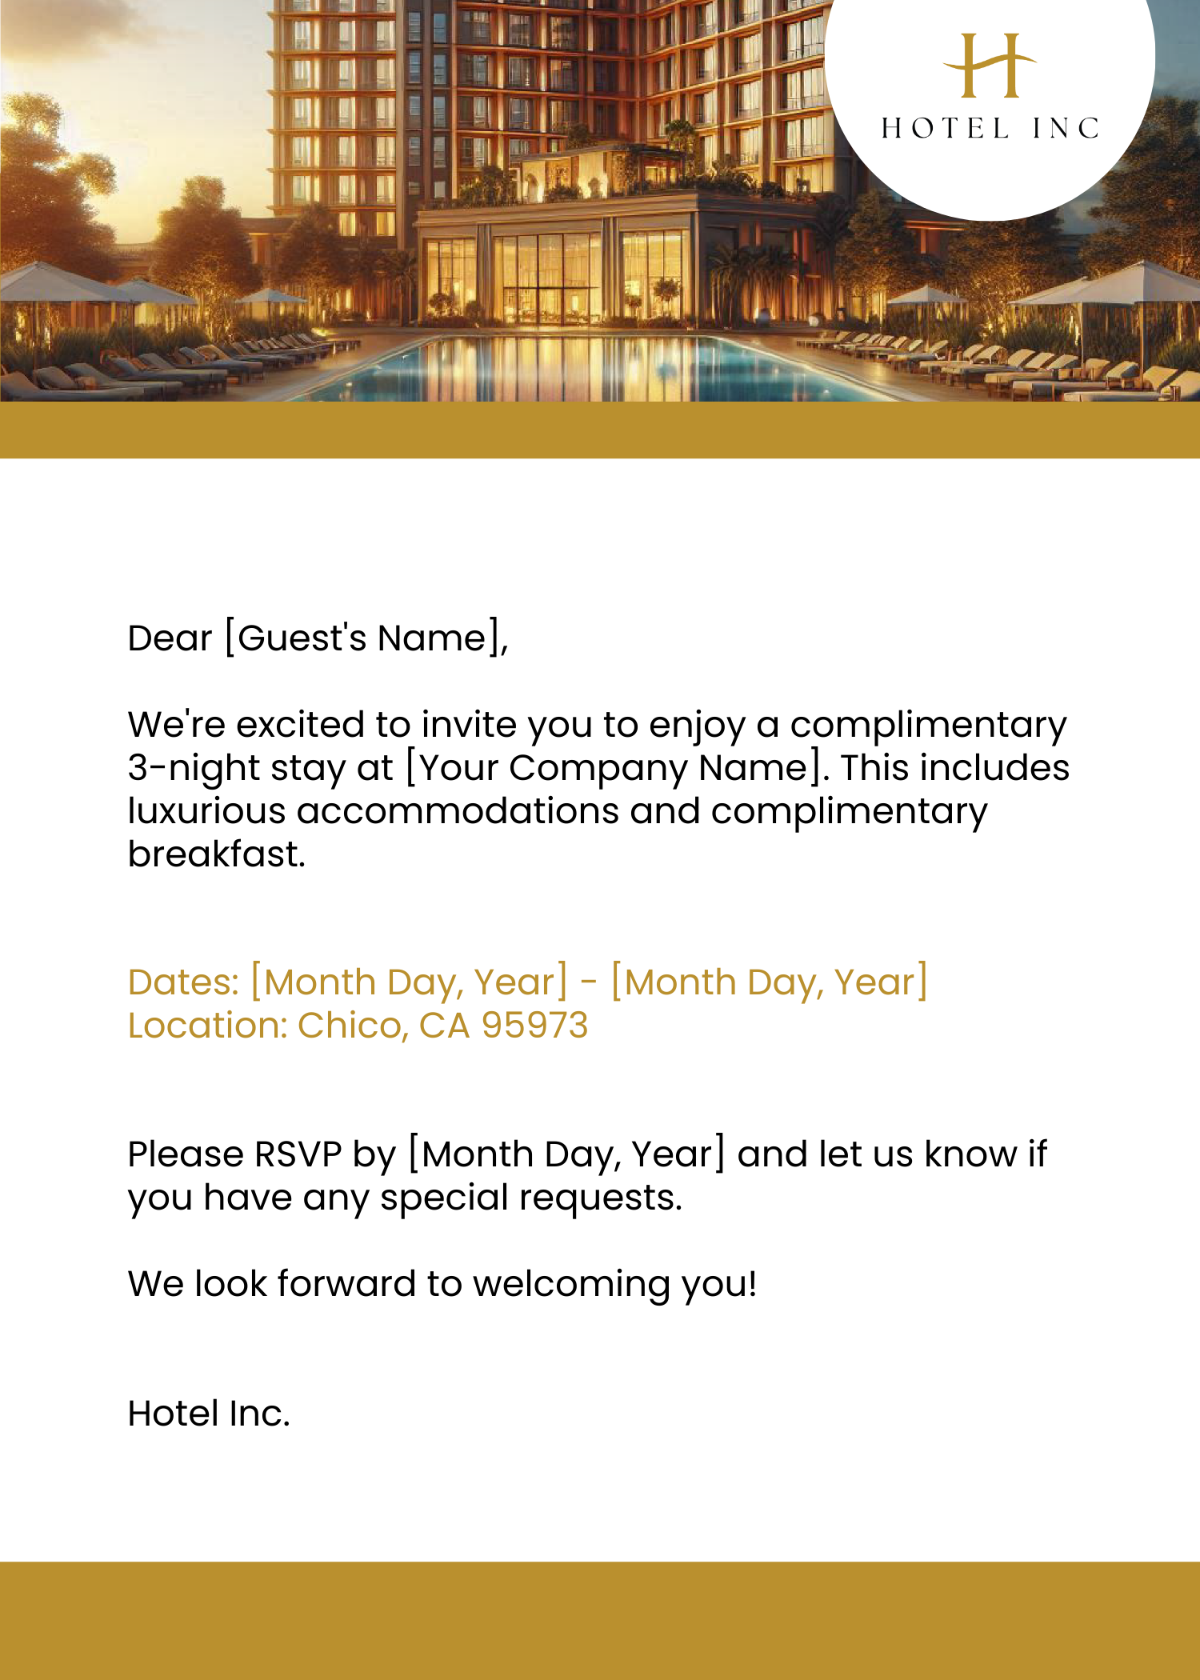 Hotel Email Invitation